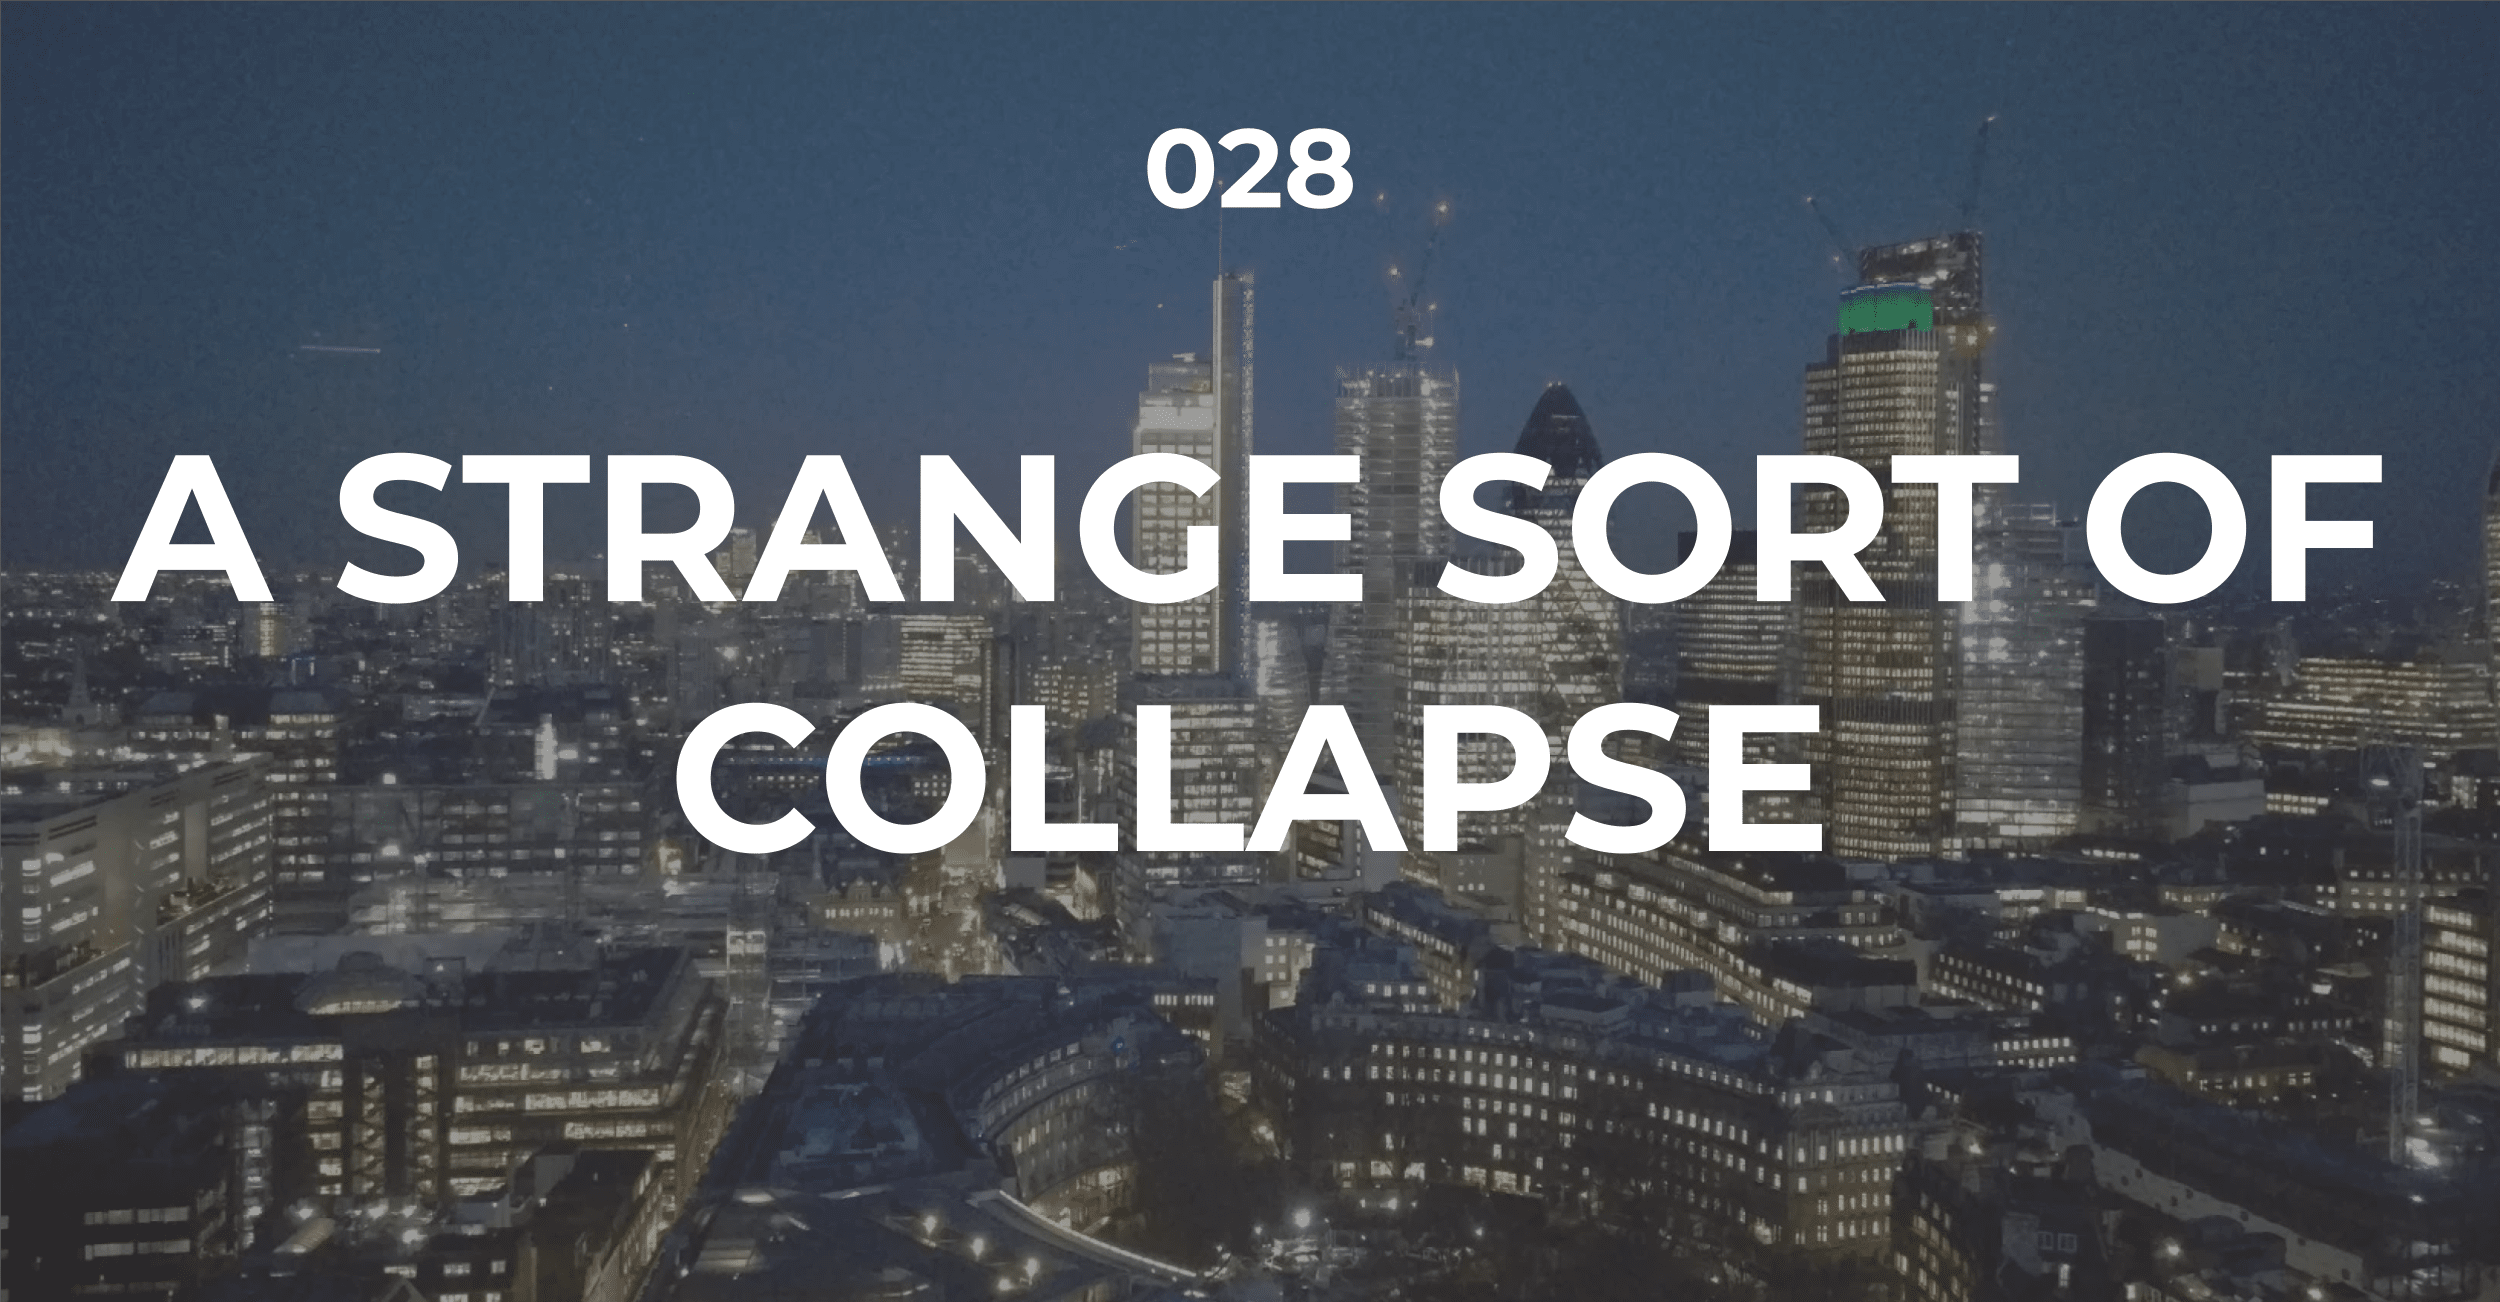 A strange sort of collapse